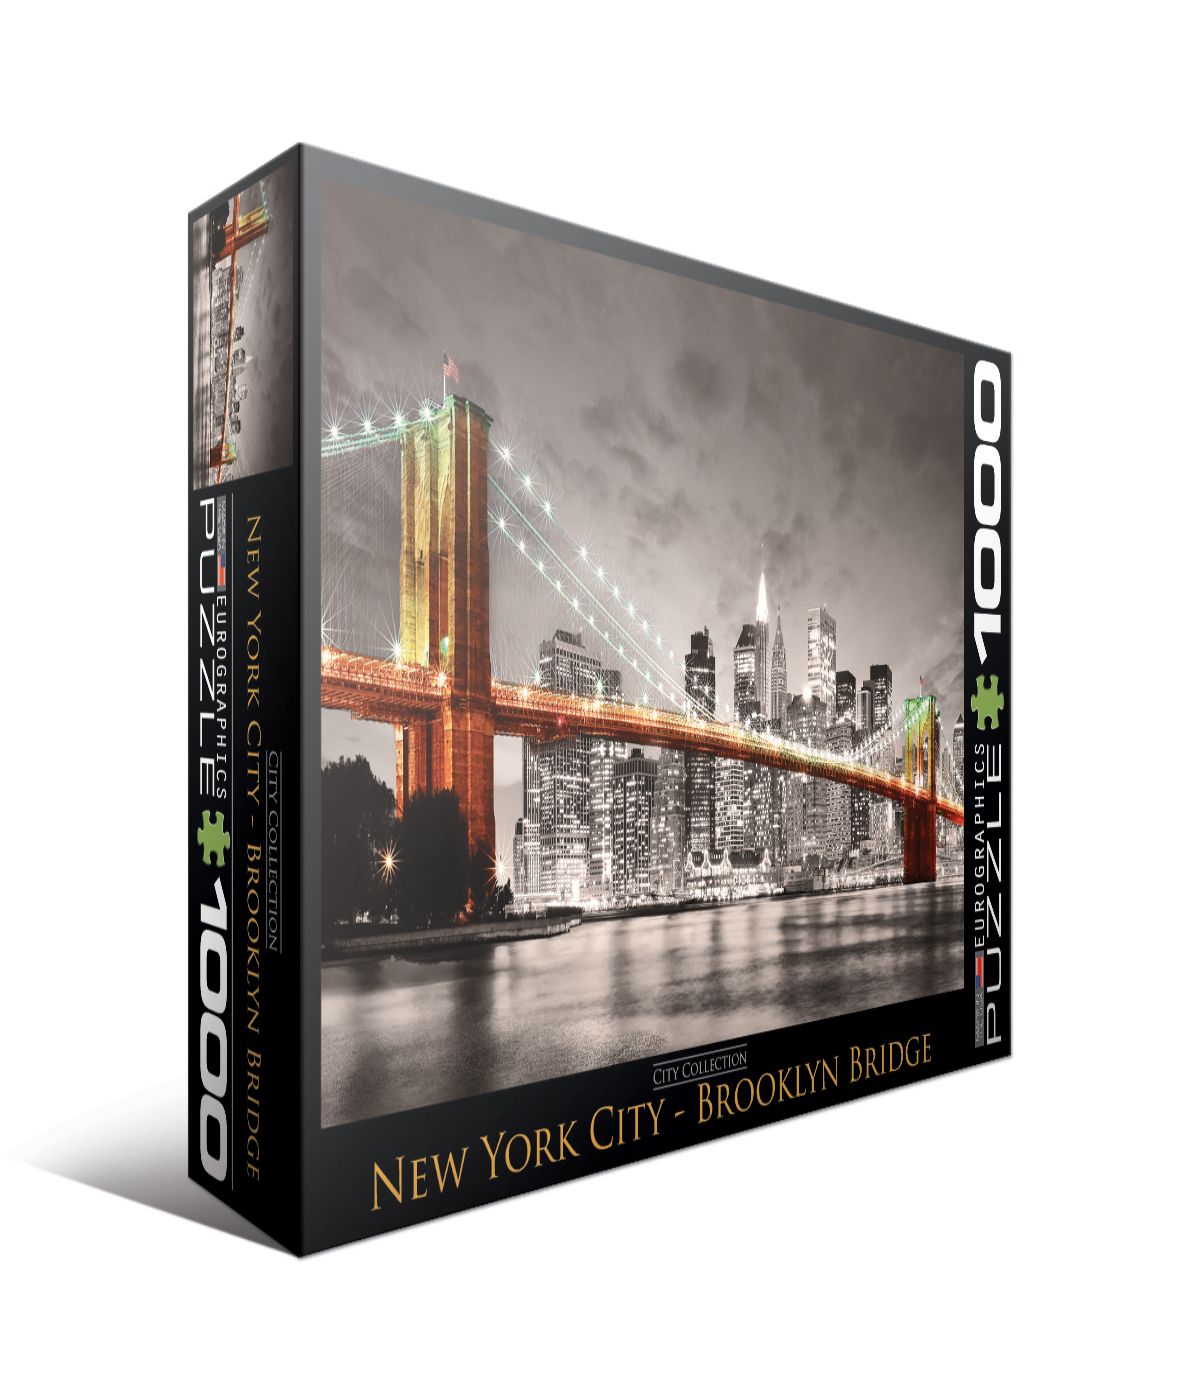 City Collection - New York City - Brooklyn Bridge: 1000 Pcs Multi